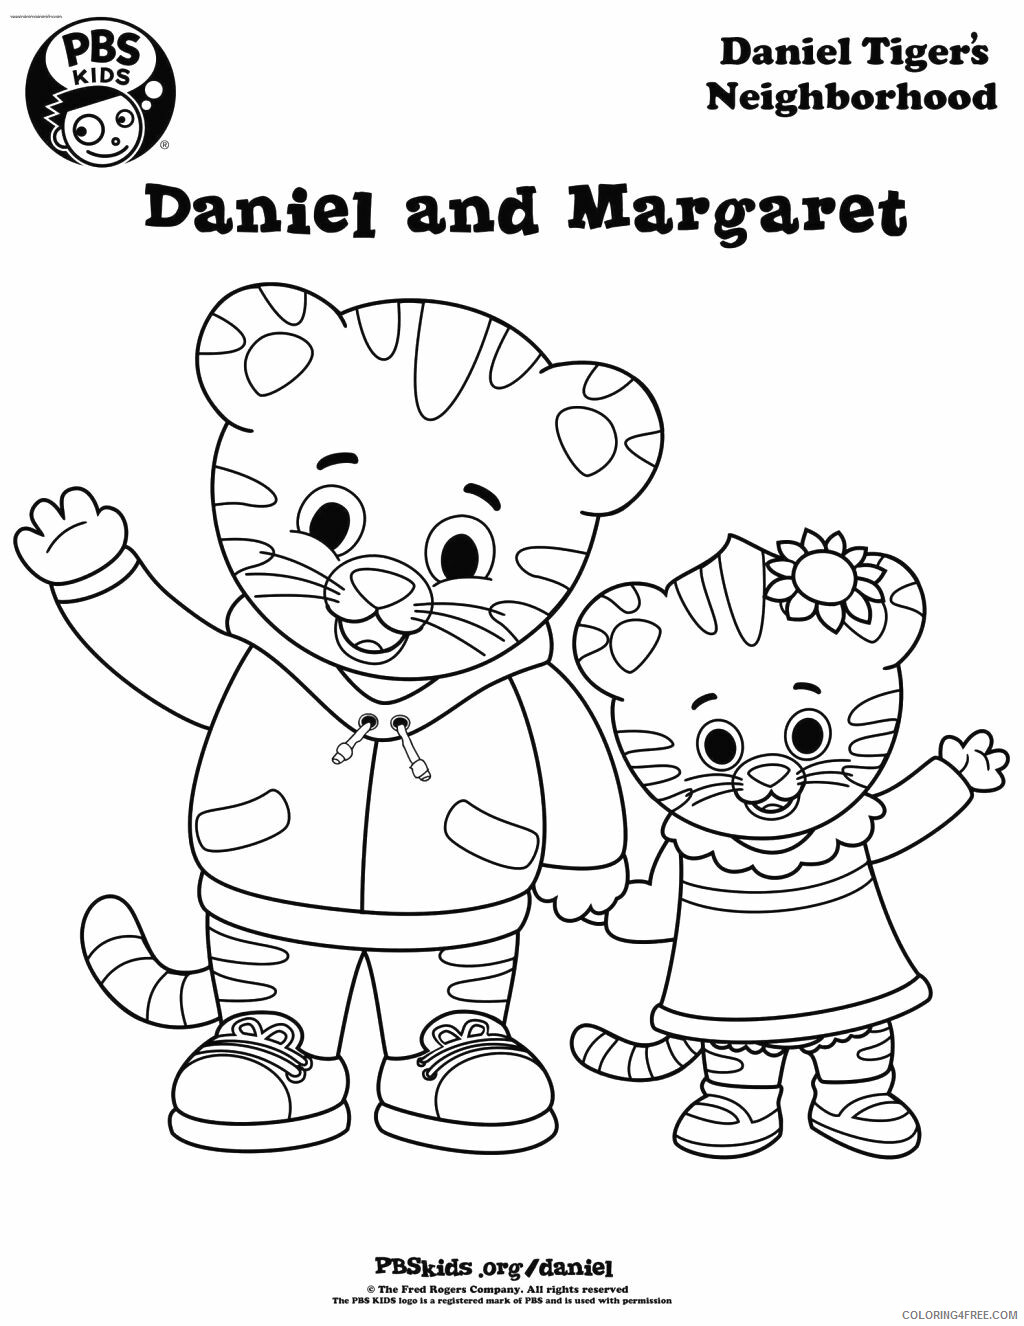 Daniel Tiger Coloring Pages TV Film Daniel and Margaret Daniel Tiger 2020 02343 Coloring4free